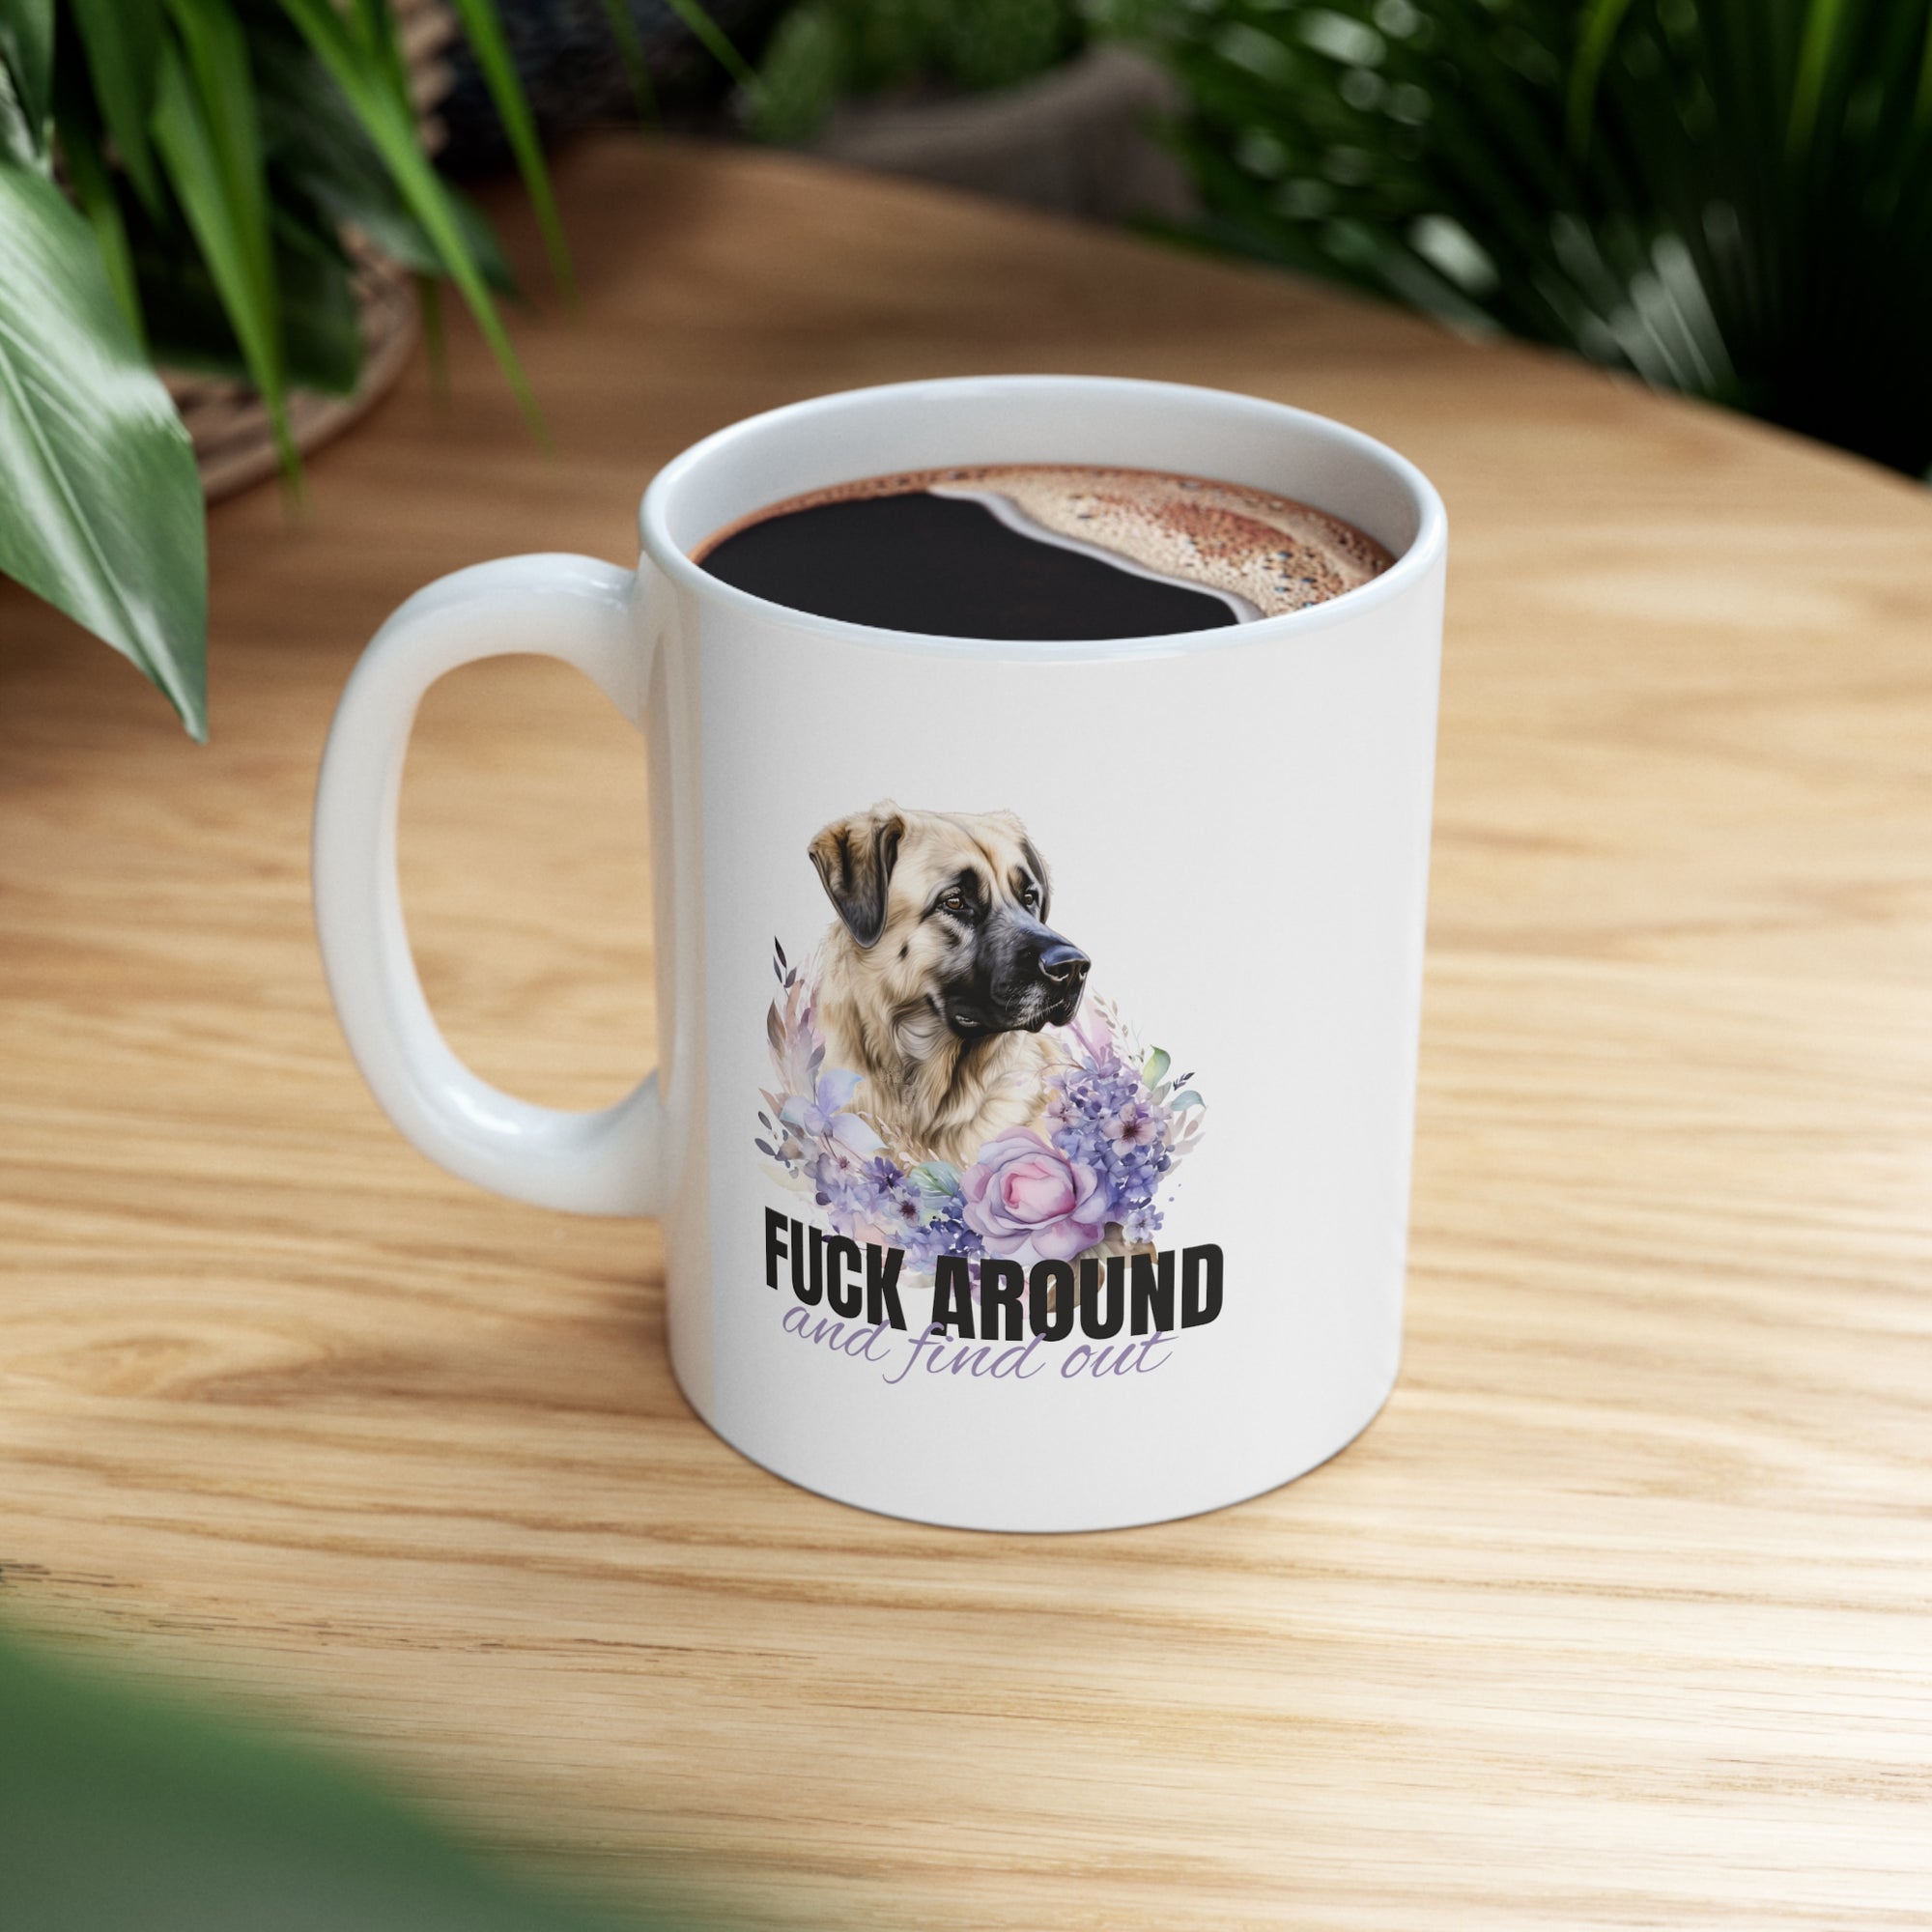 Fuck Around and Find Out Anatolian Shepherd Dog Coffee Mug